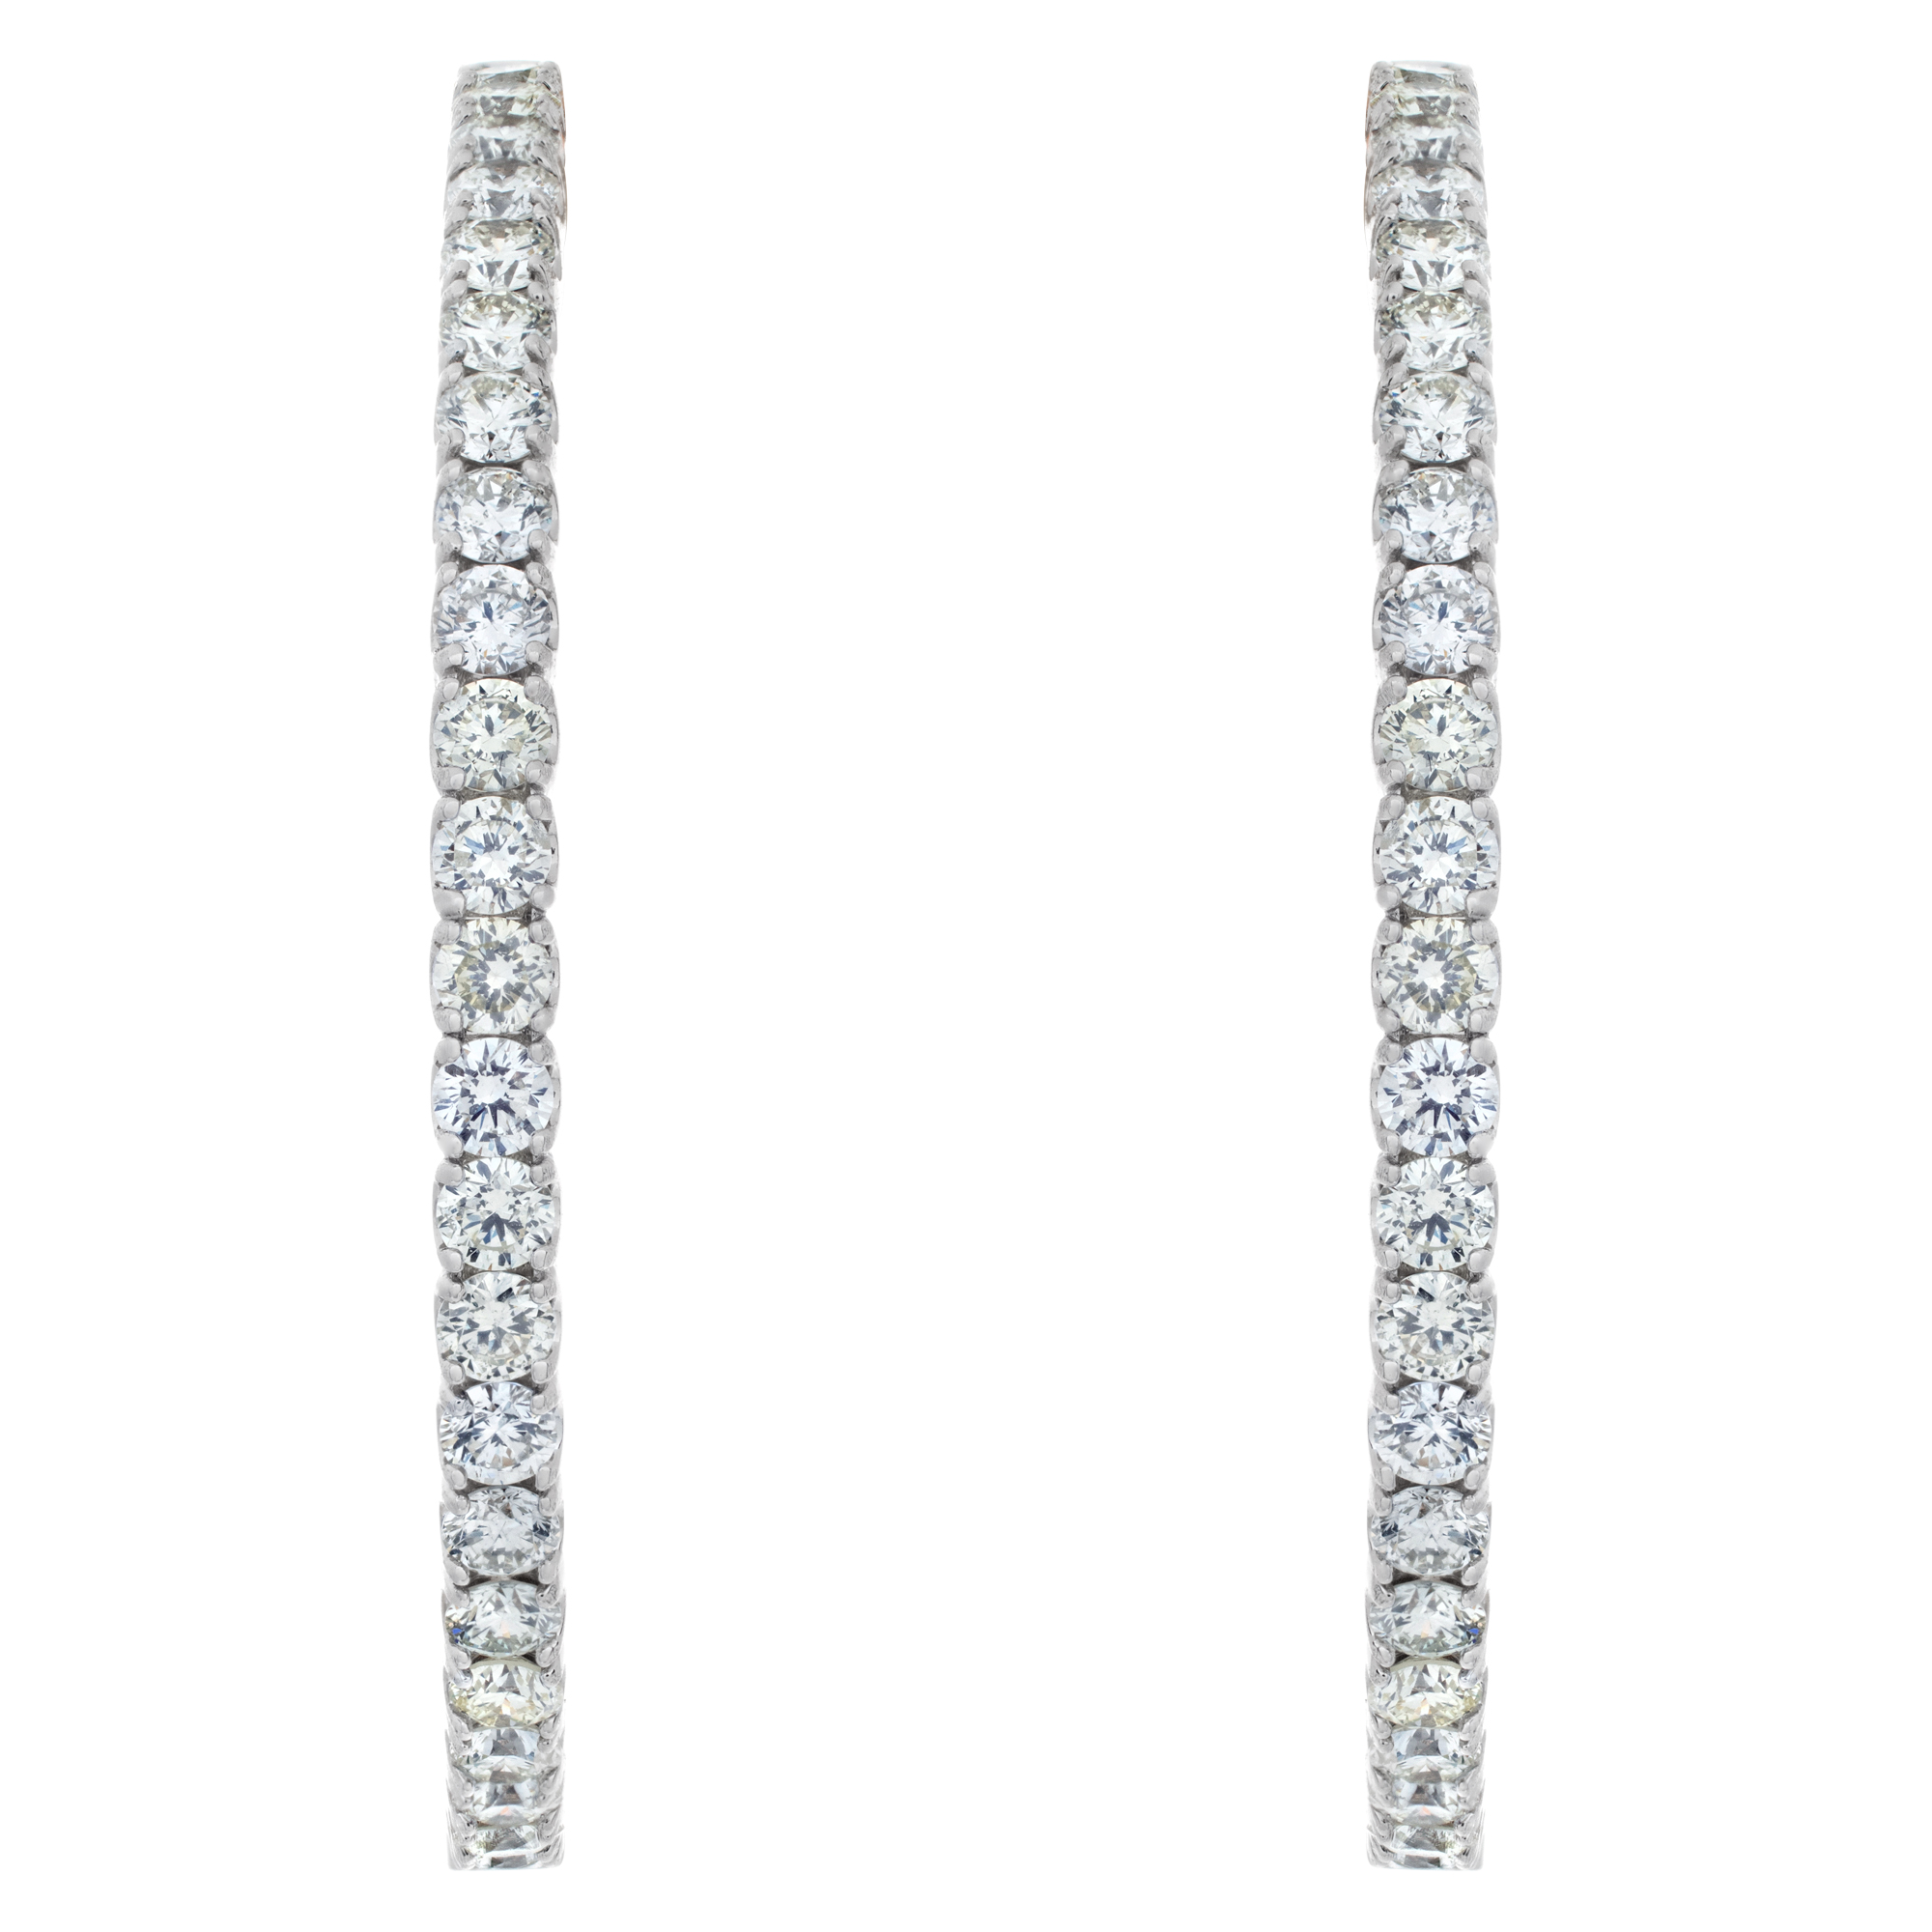 Diamond hoop earrings in 14k white gold with 3.15 carats in diamonds